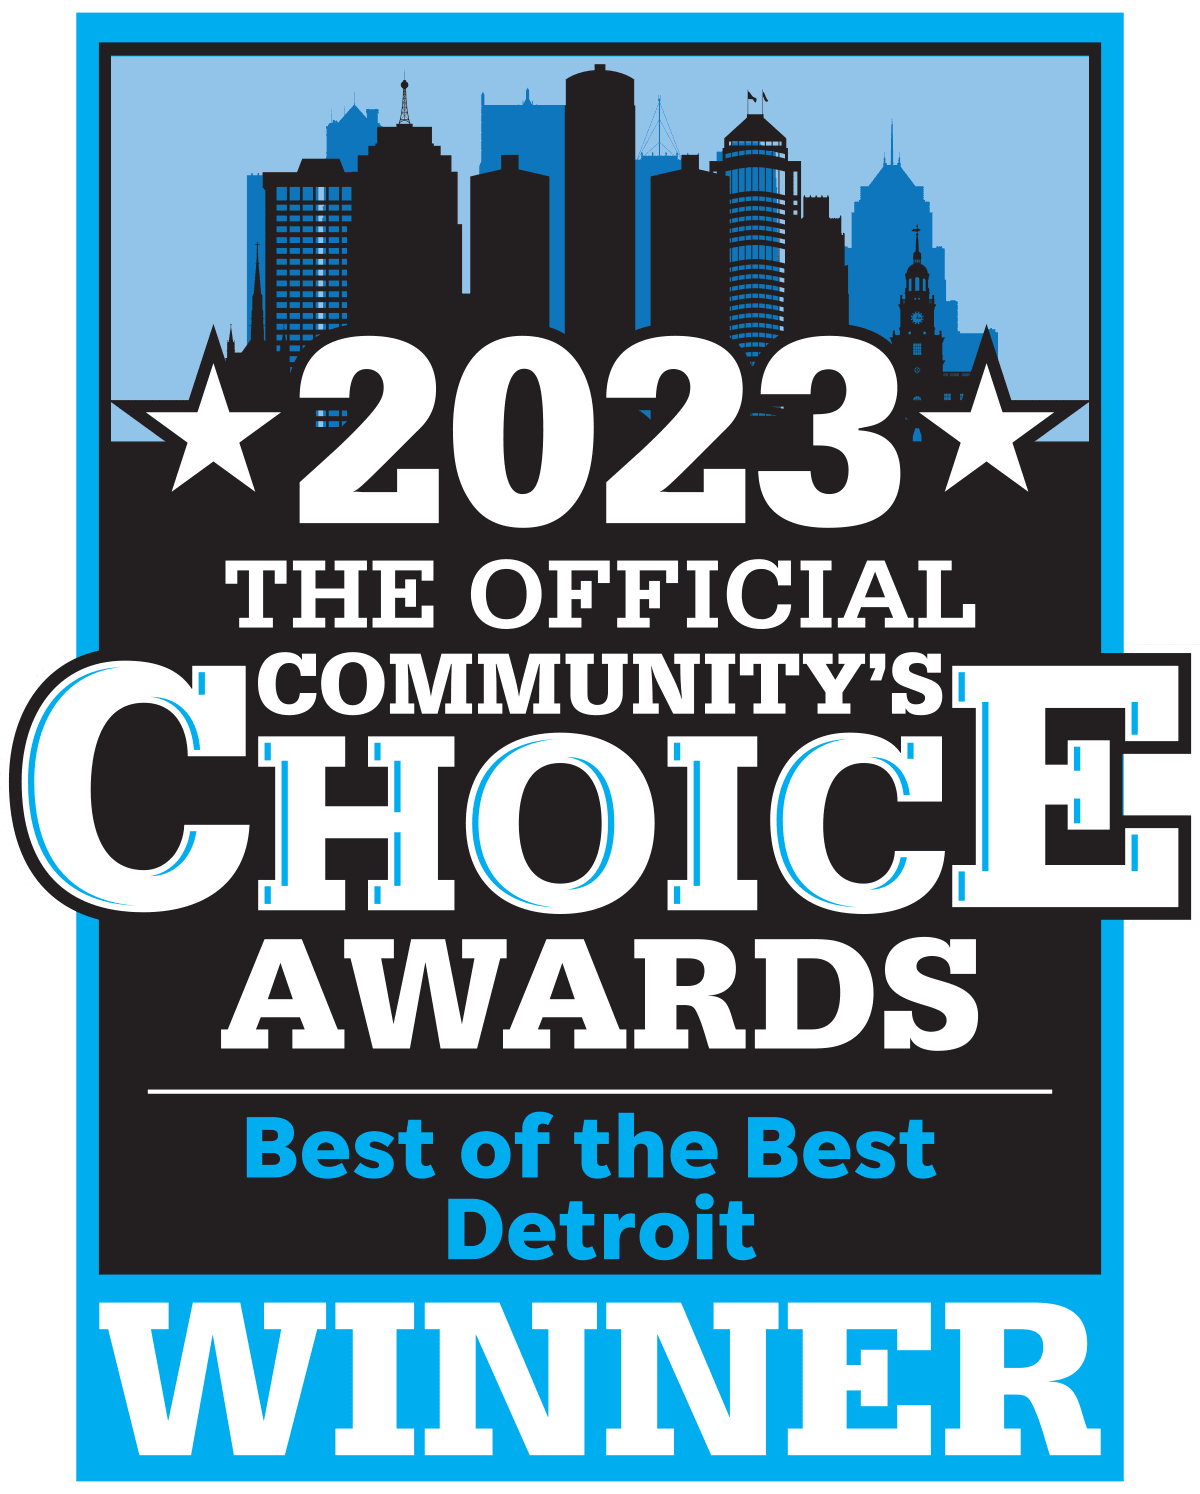 Best of the Best Detroit logo